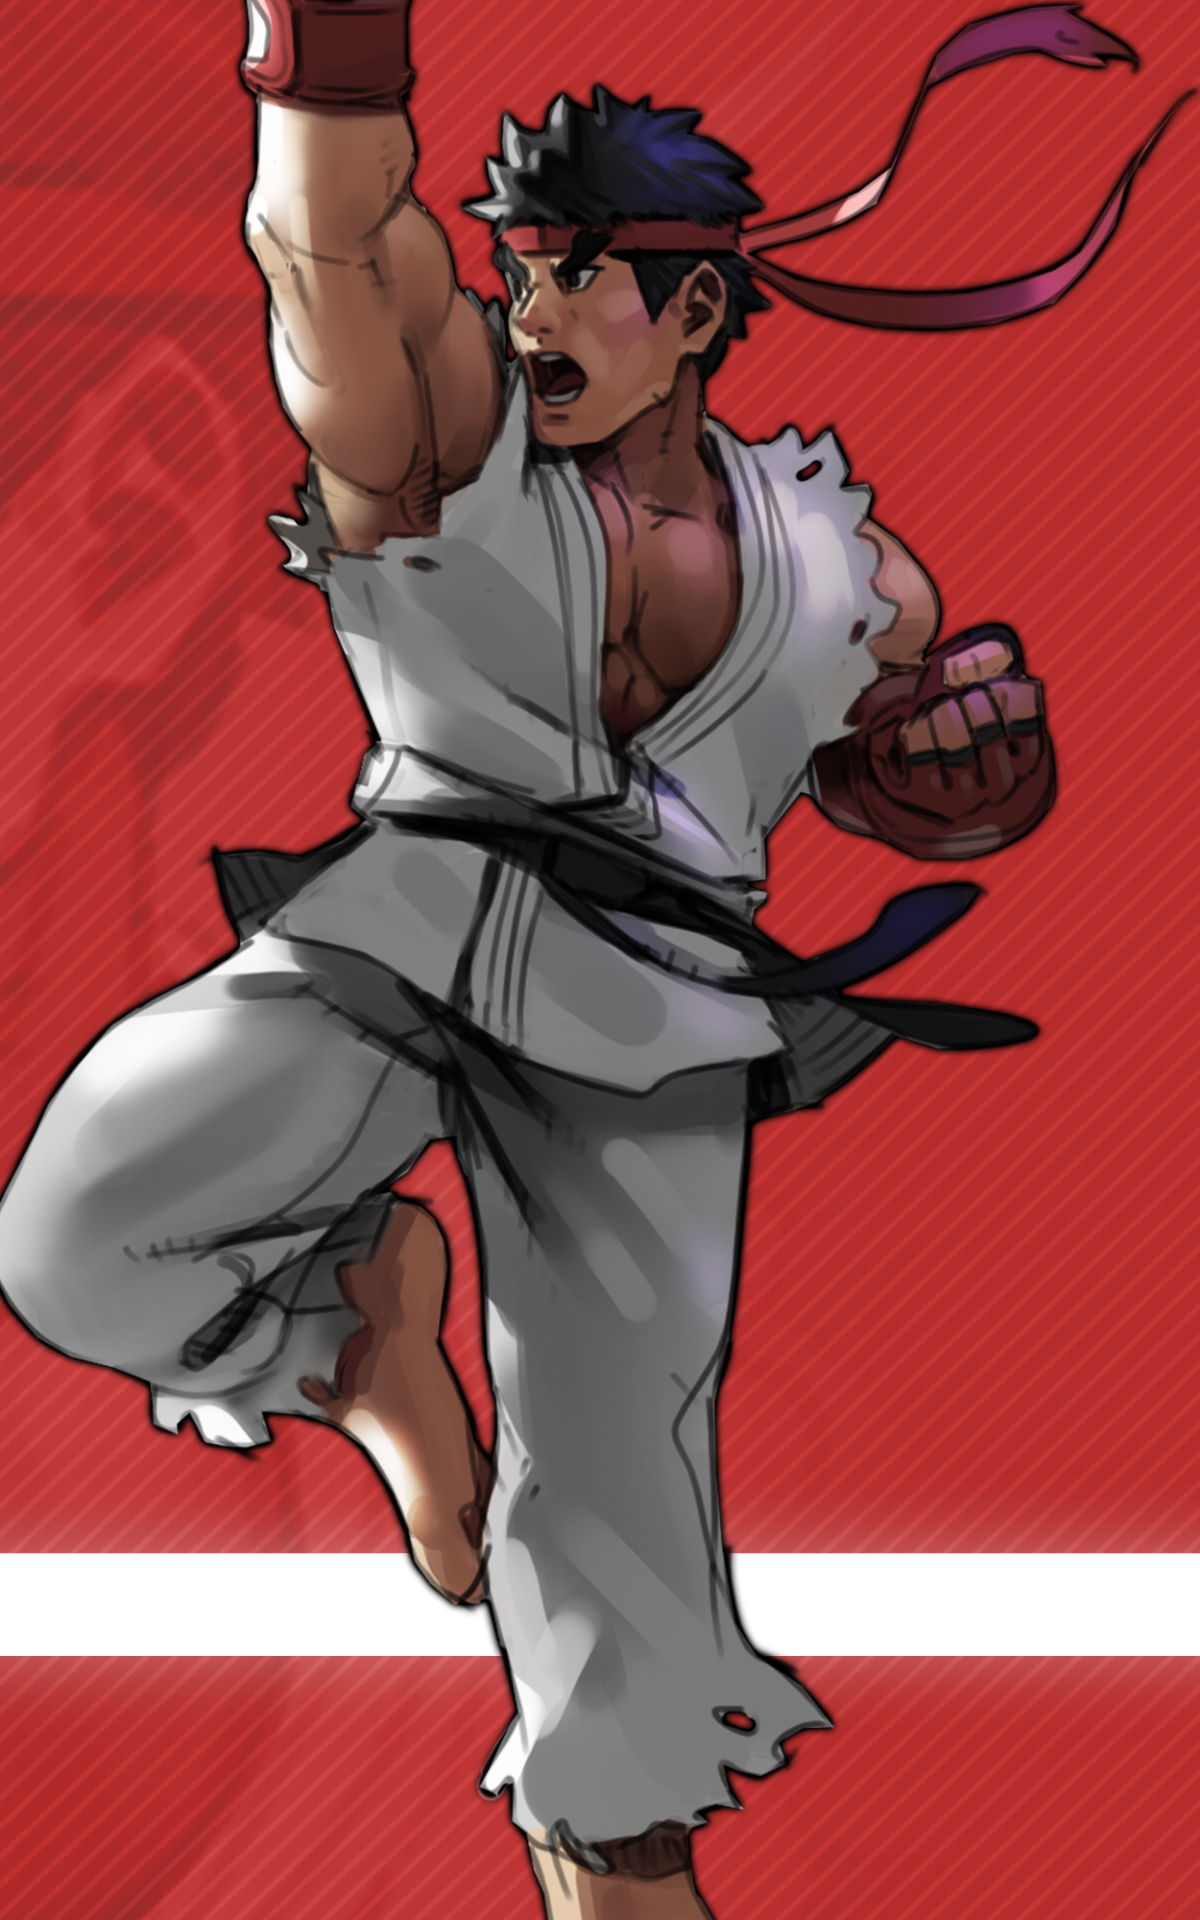 Ryu In Super Smash Bros. Ultimate by Callum Nakajima